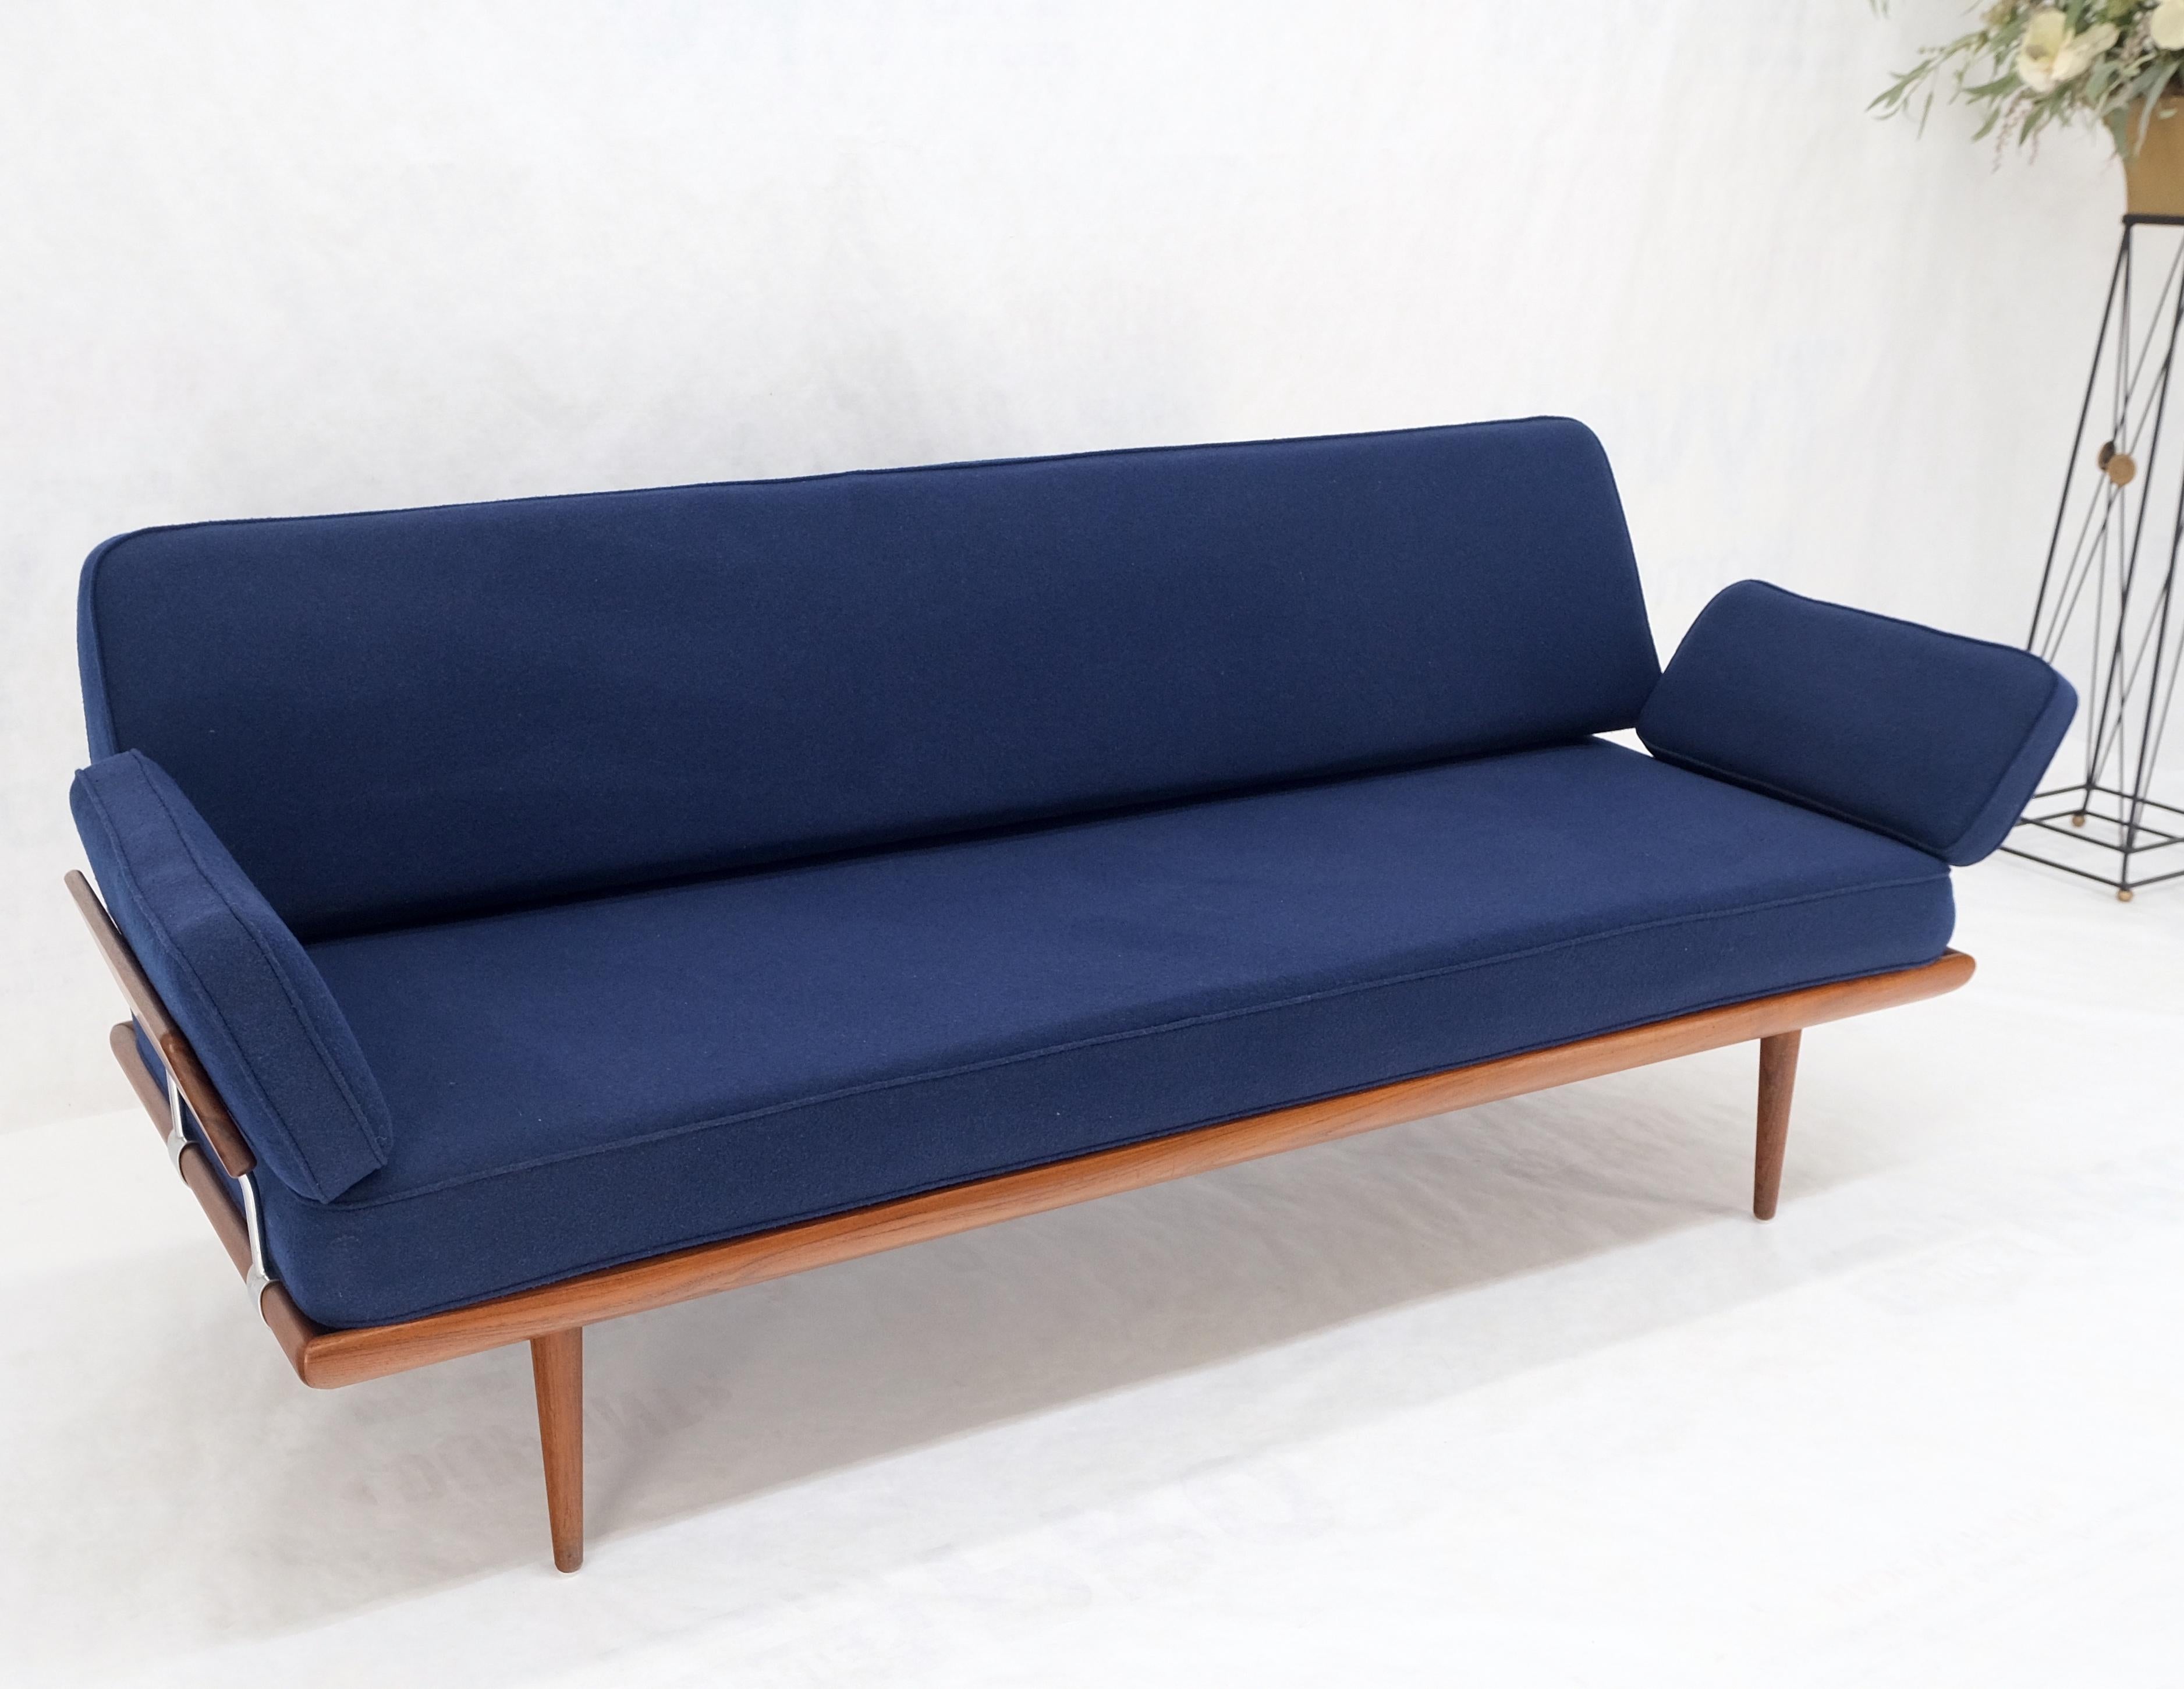 Peter Hvidt Solid Teak Sofa New Blue Wool Upholstery Original Springs Mint! For Sale 9